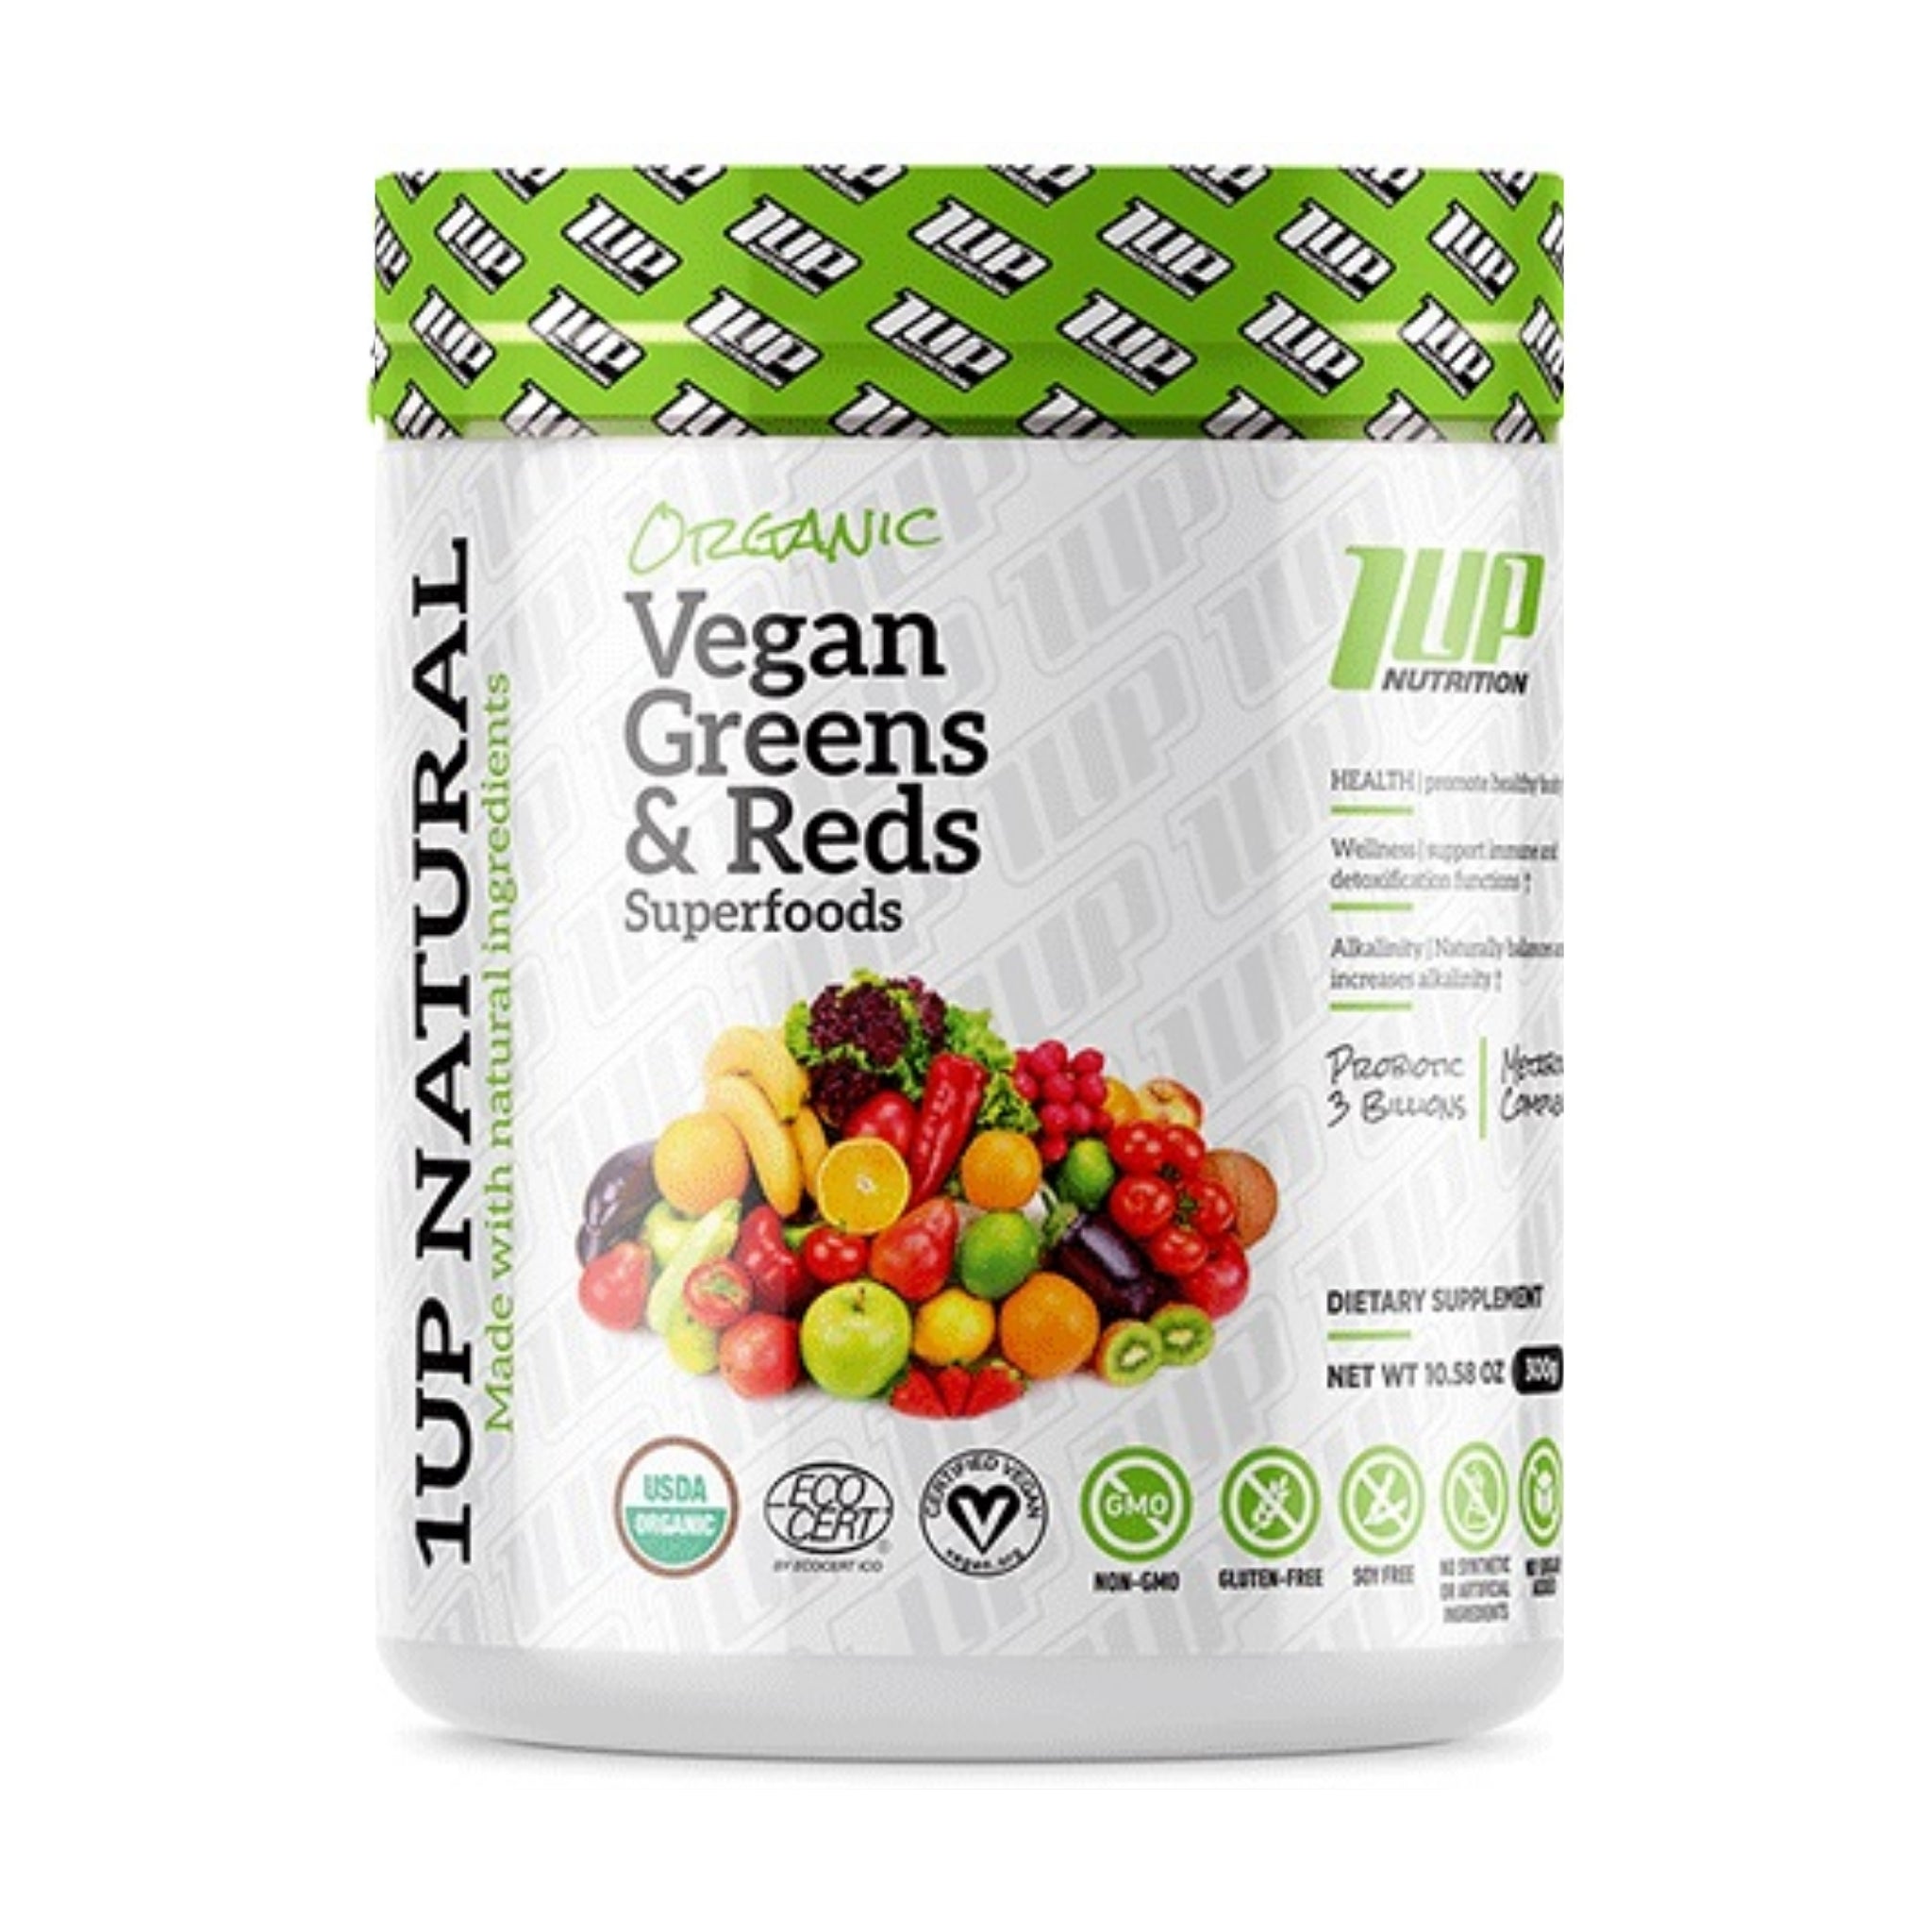 1Up Nutrition Organic Vegan Greens & Reds Superfoods